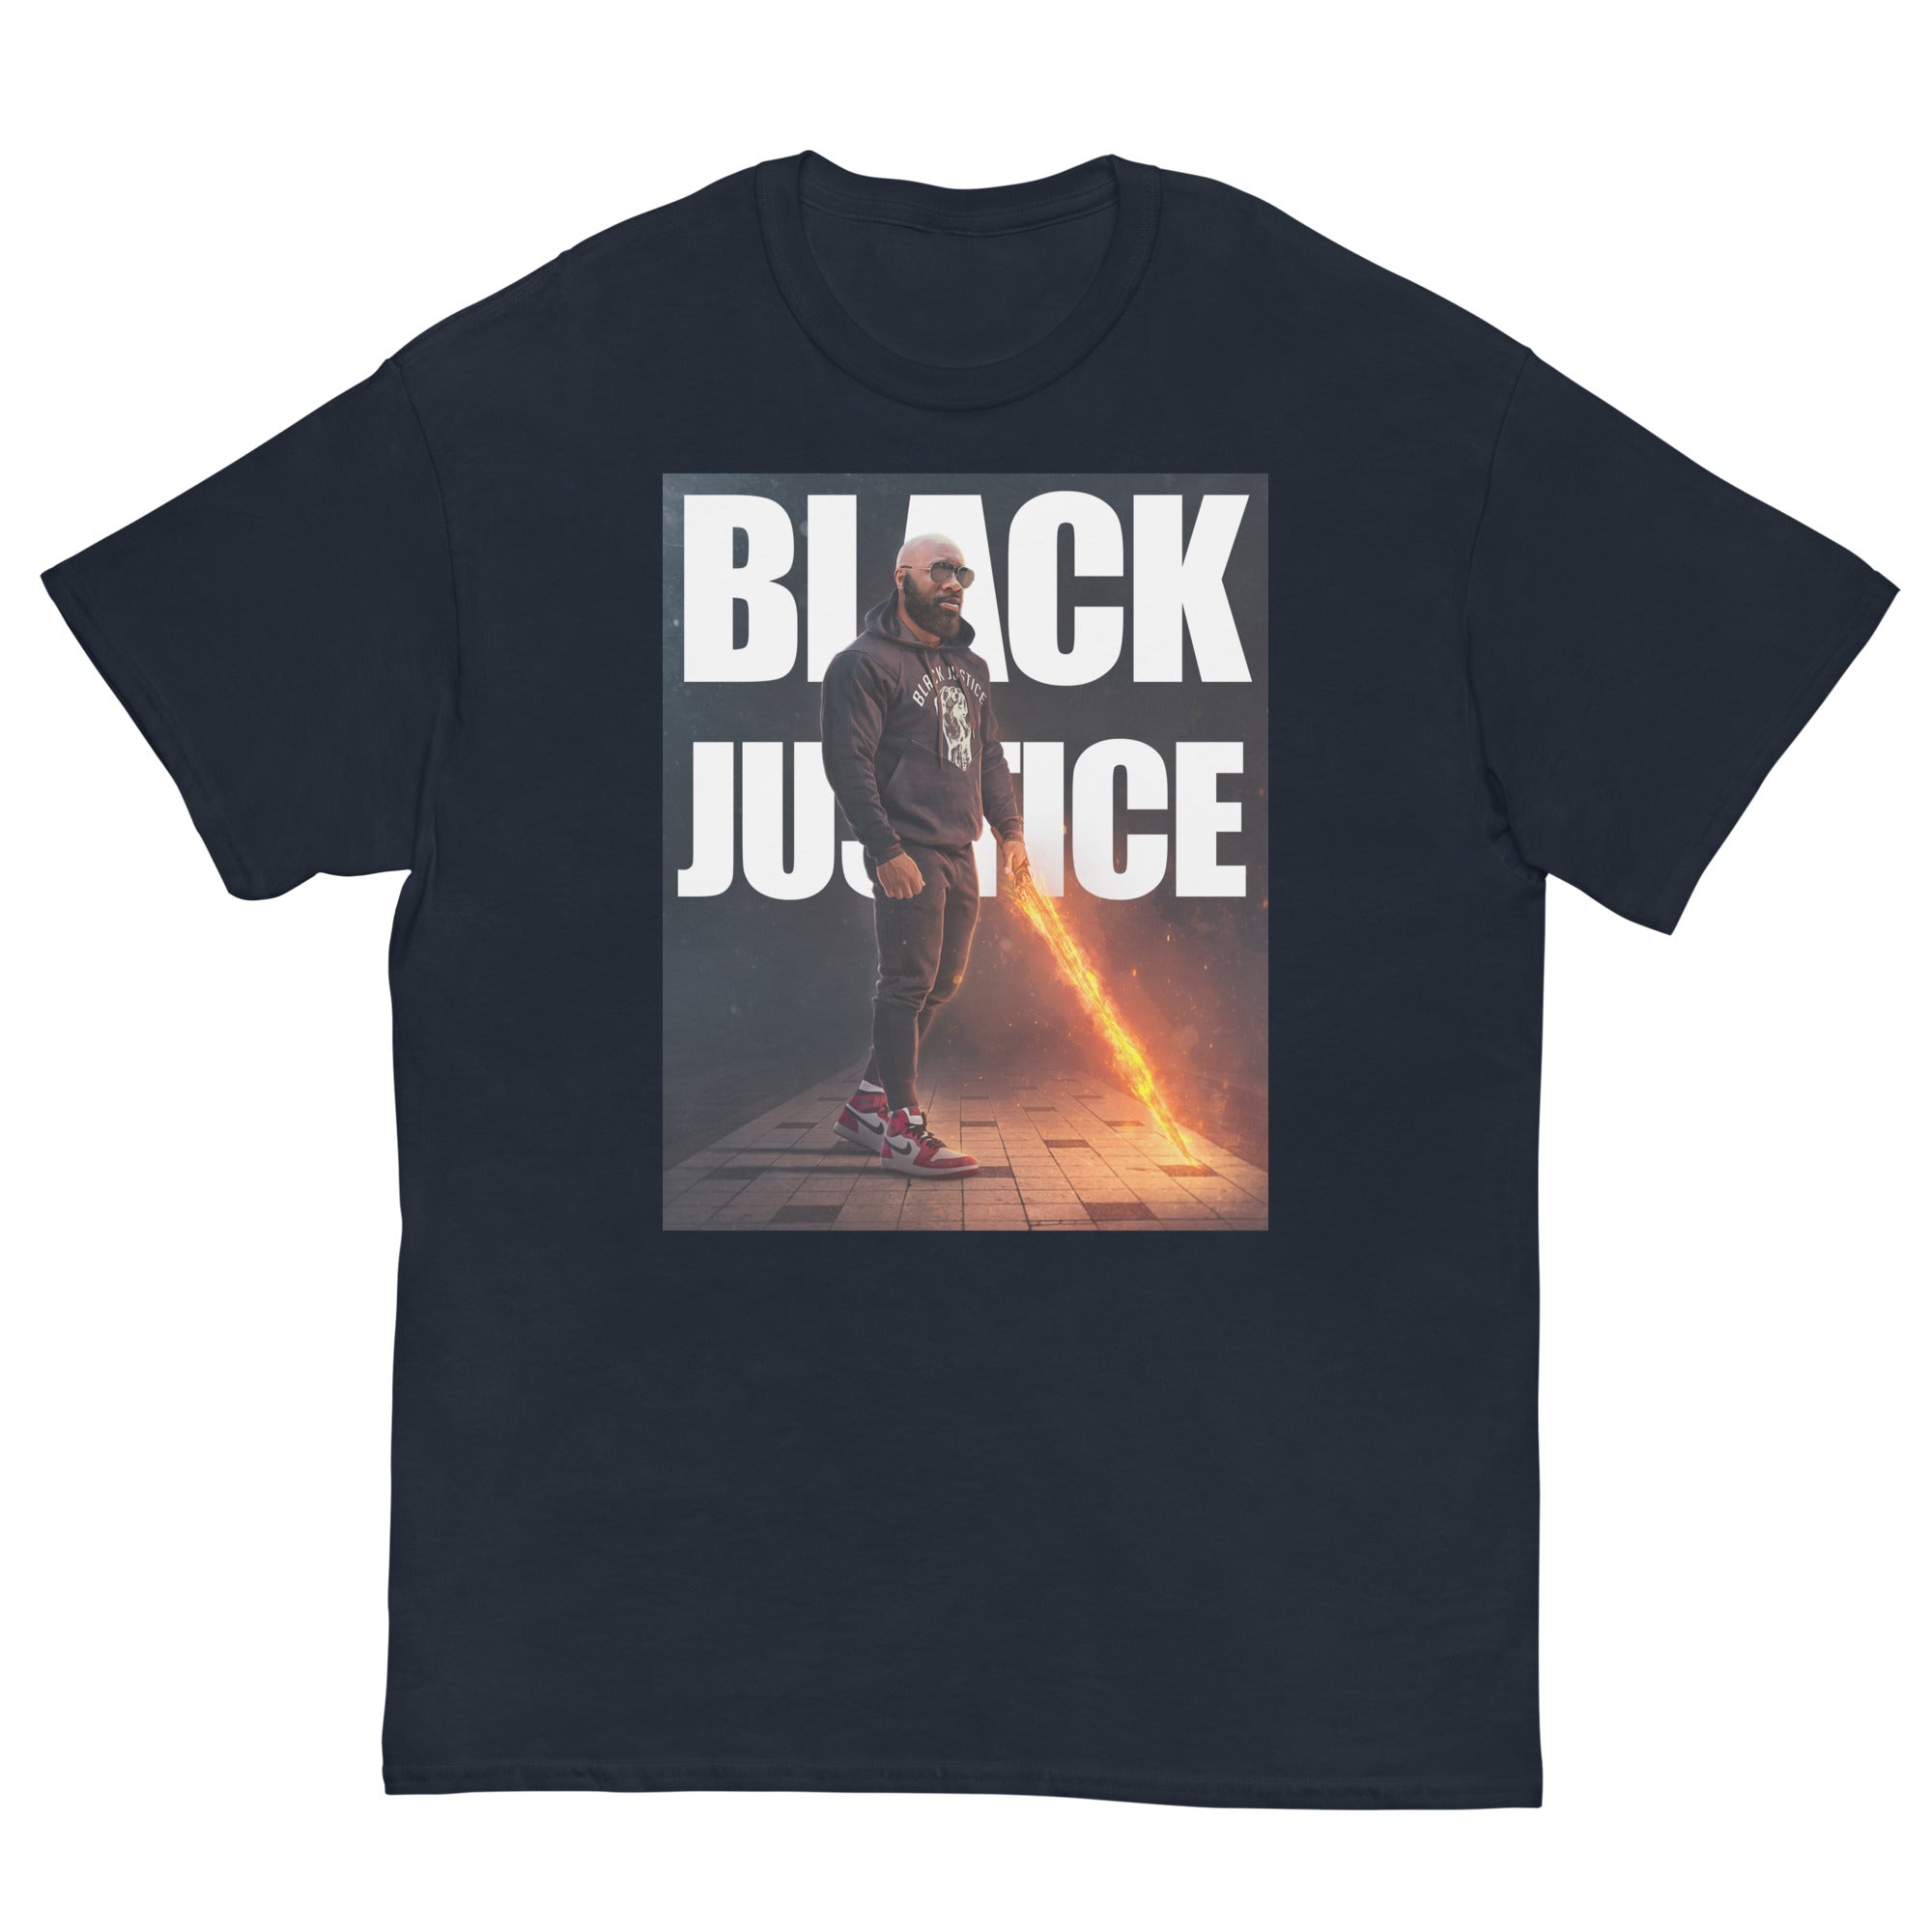 Black Justice Tee